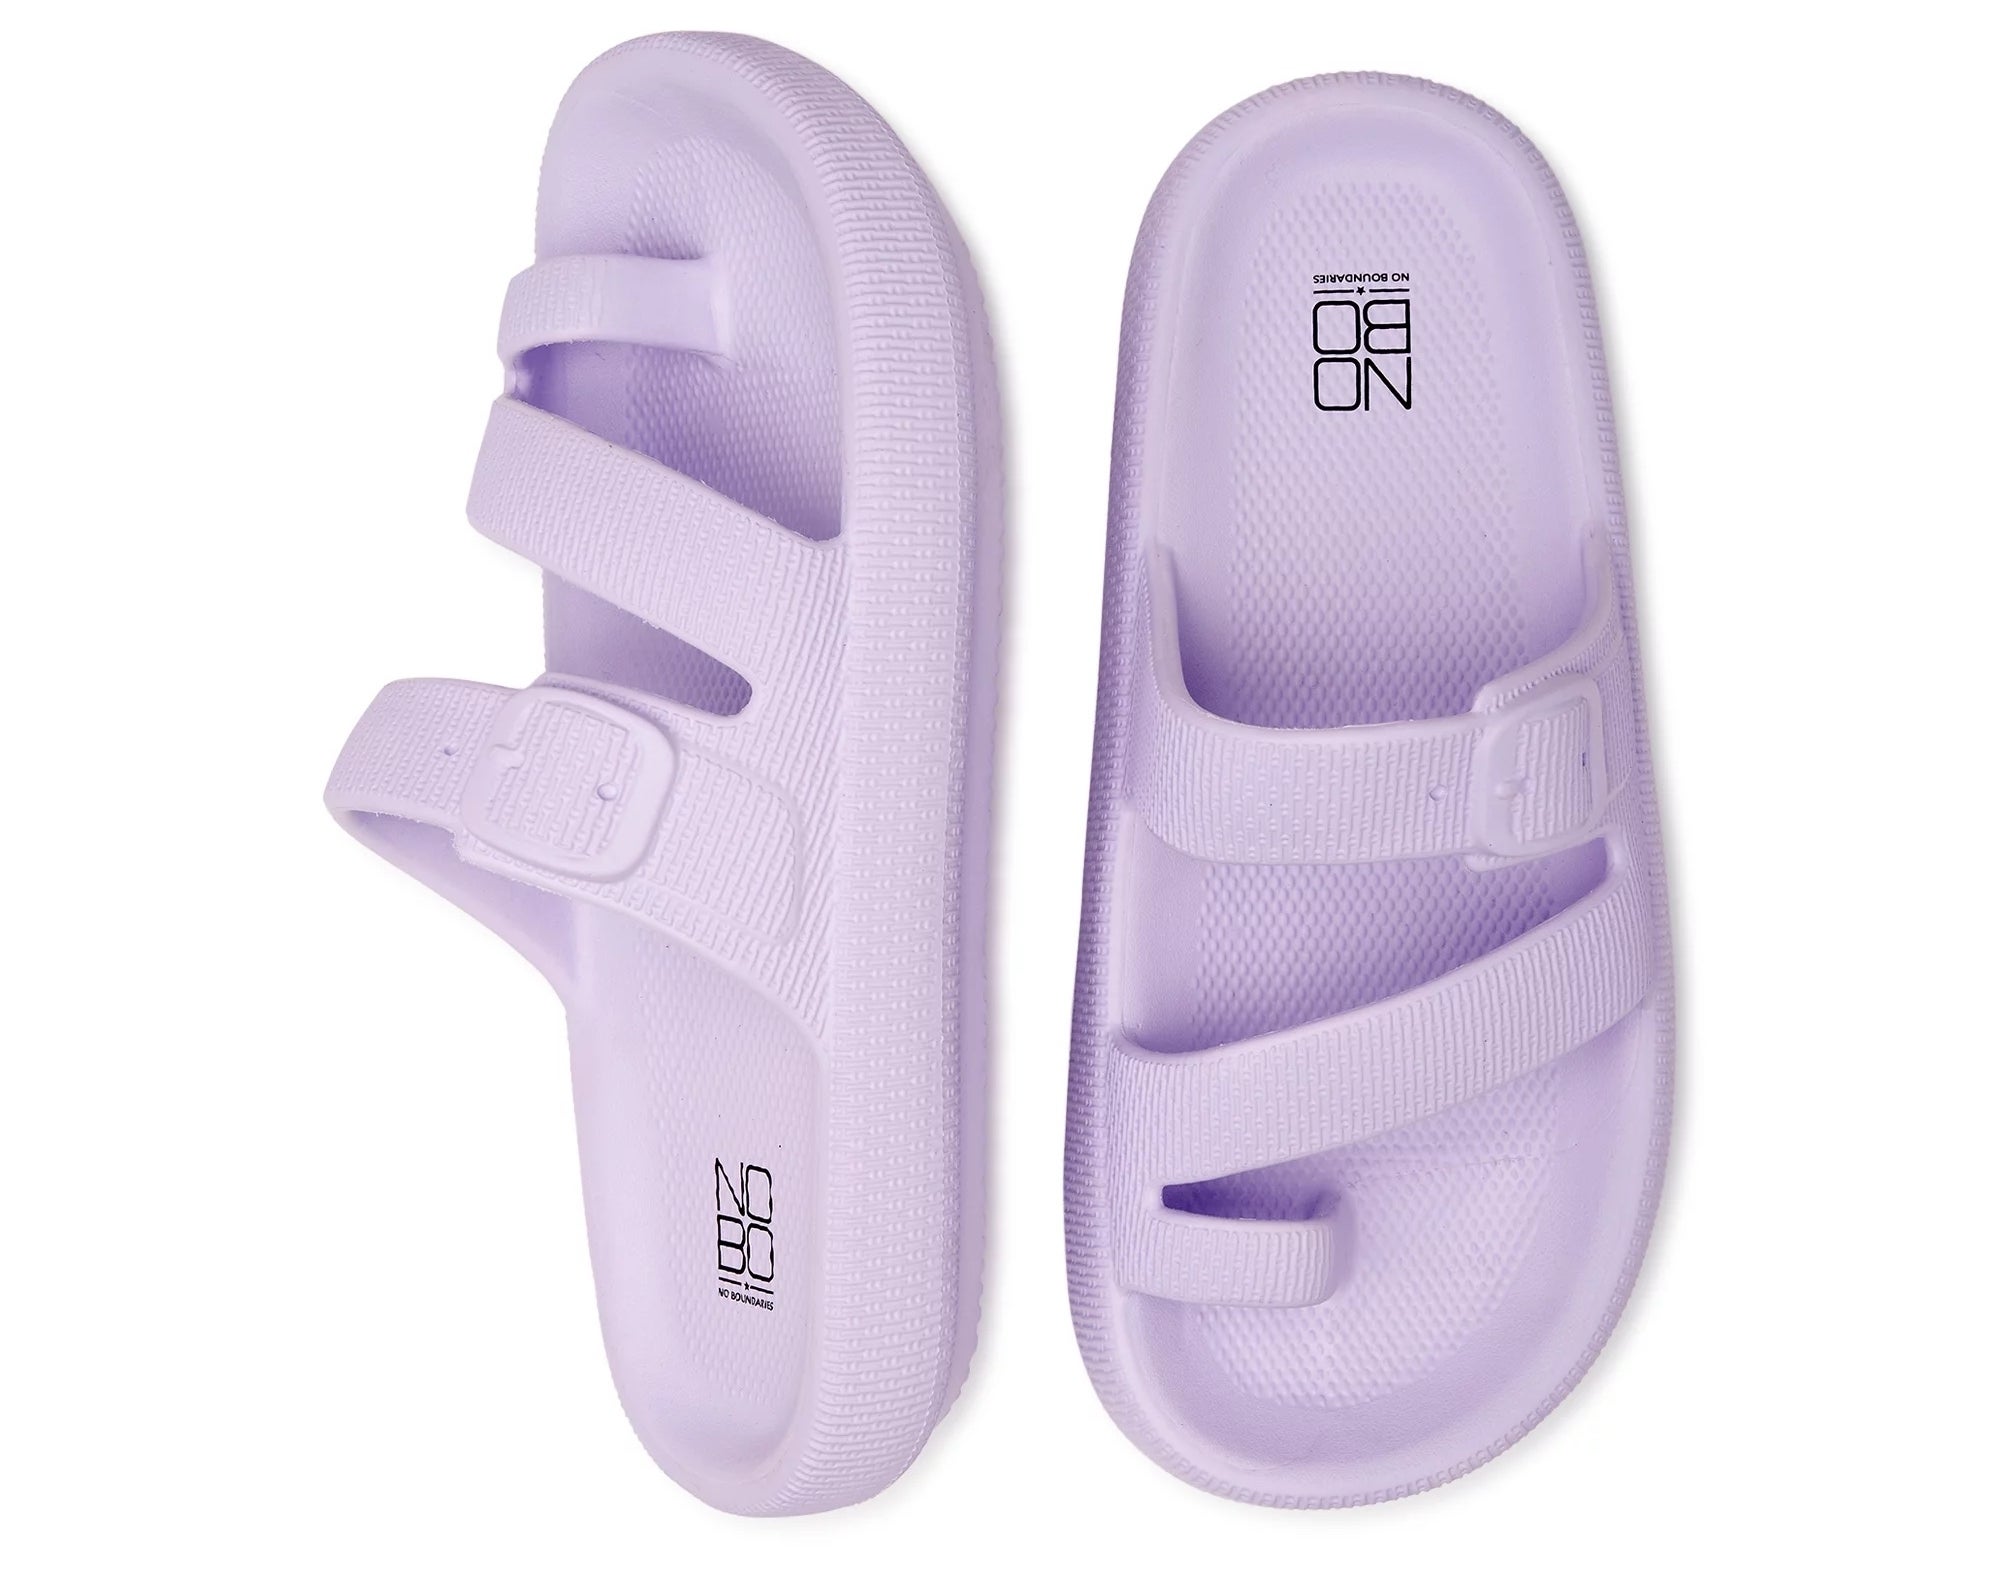 the lavender sandals